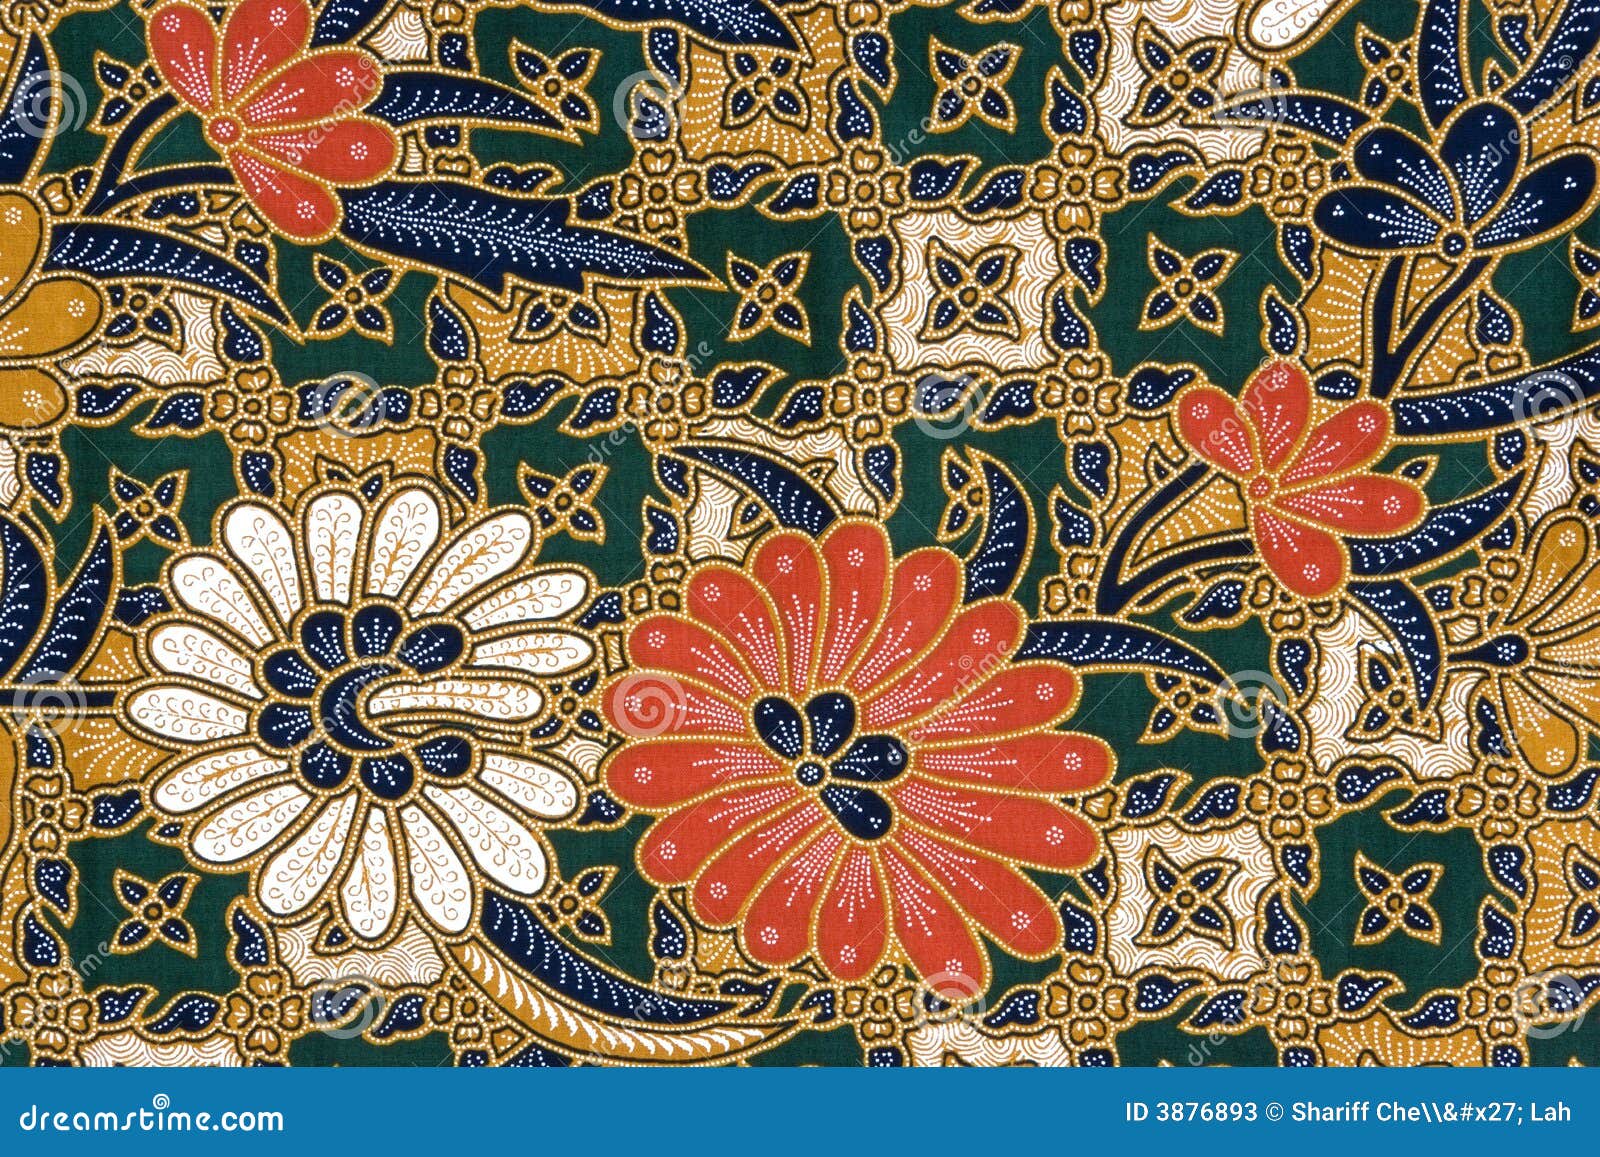  Indonesian  Batik  Sarong stock image  Image  of indonesia 